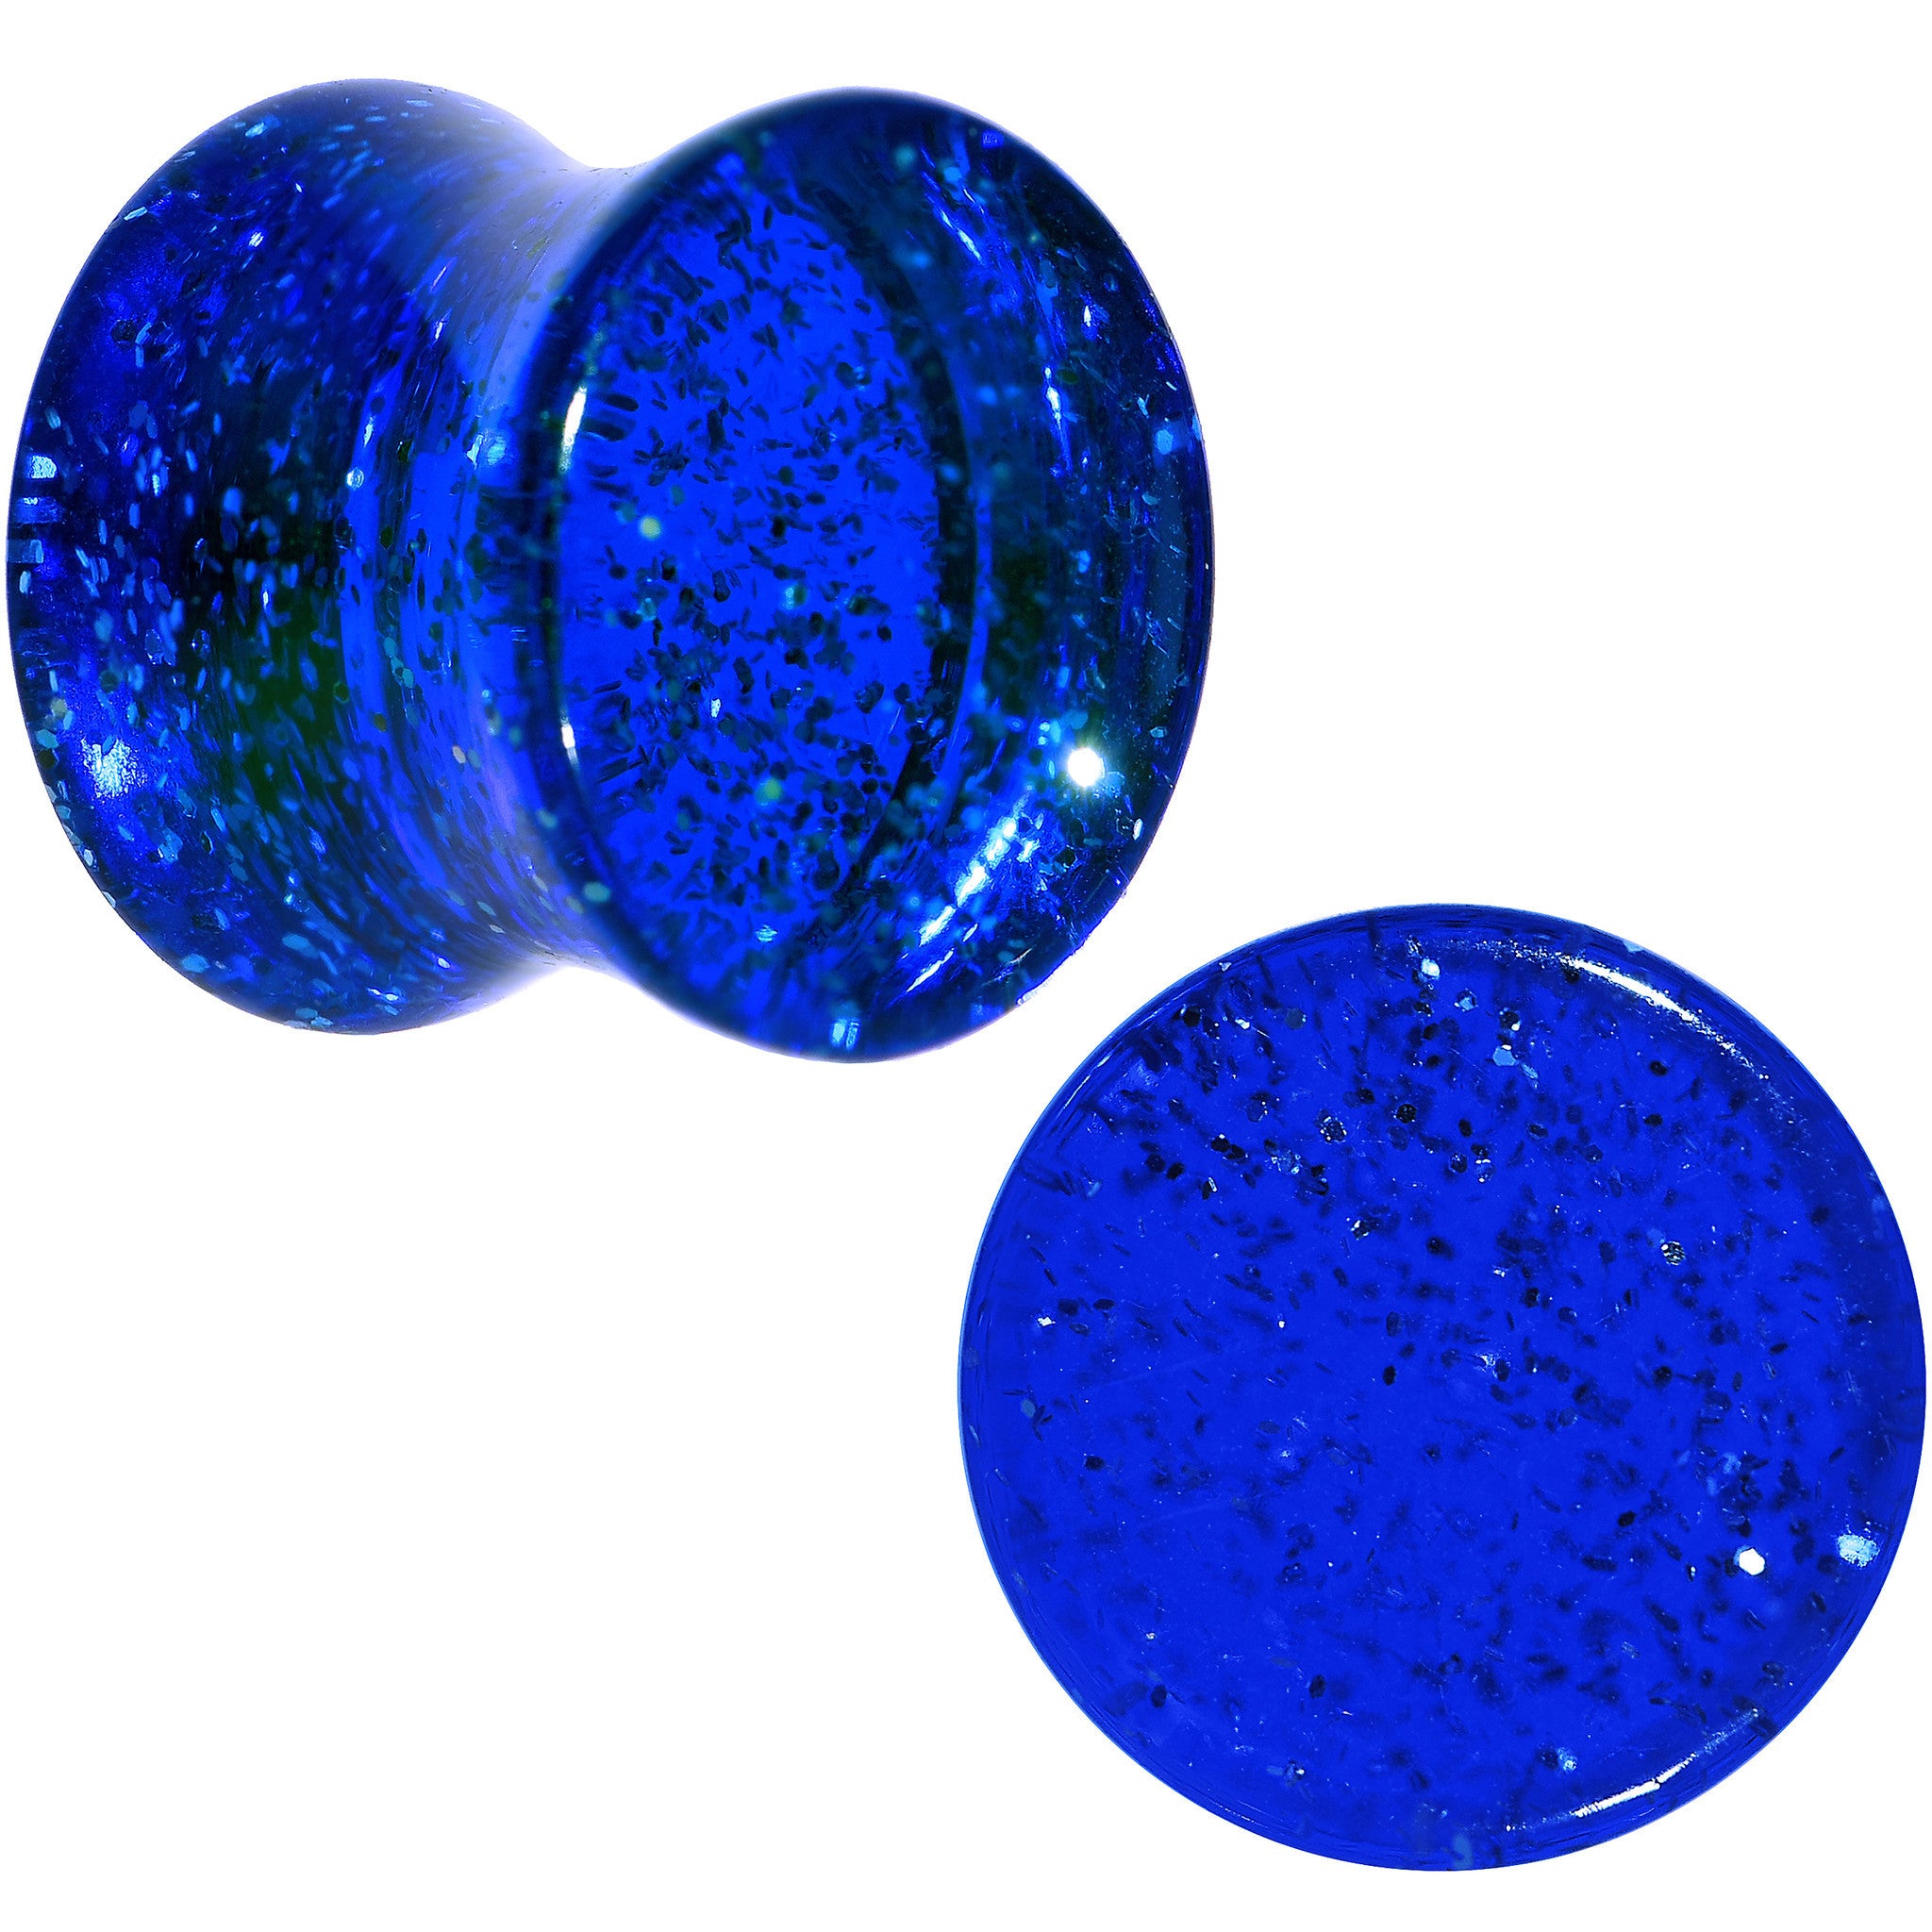 00 Gauge Blue Glitter Acrylic Saddle Plug Pair